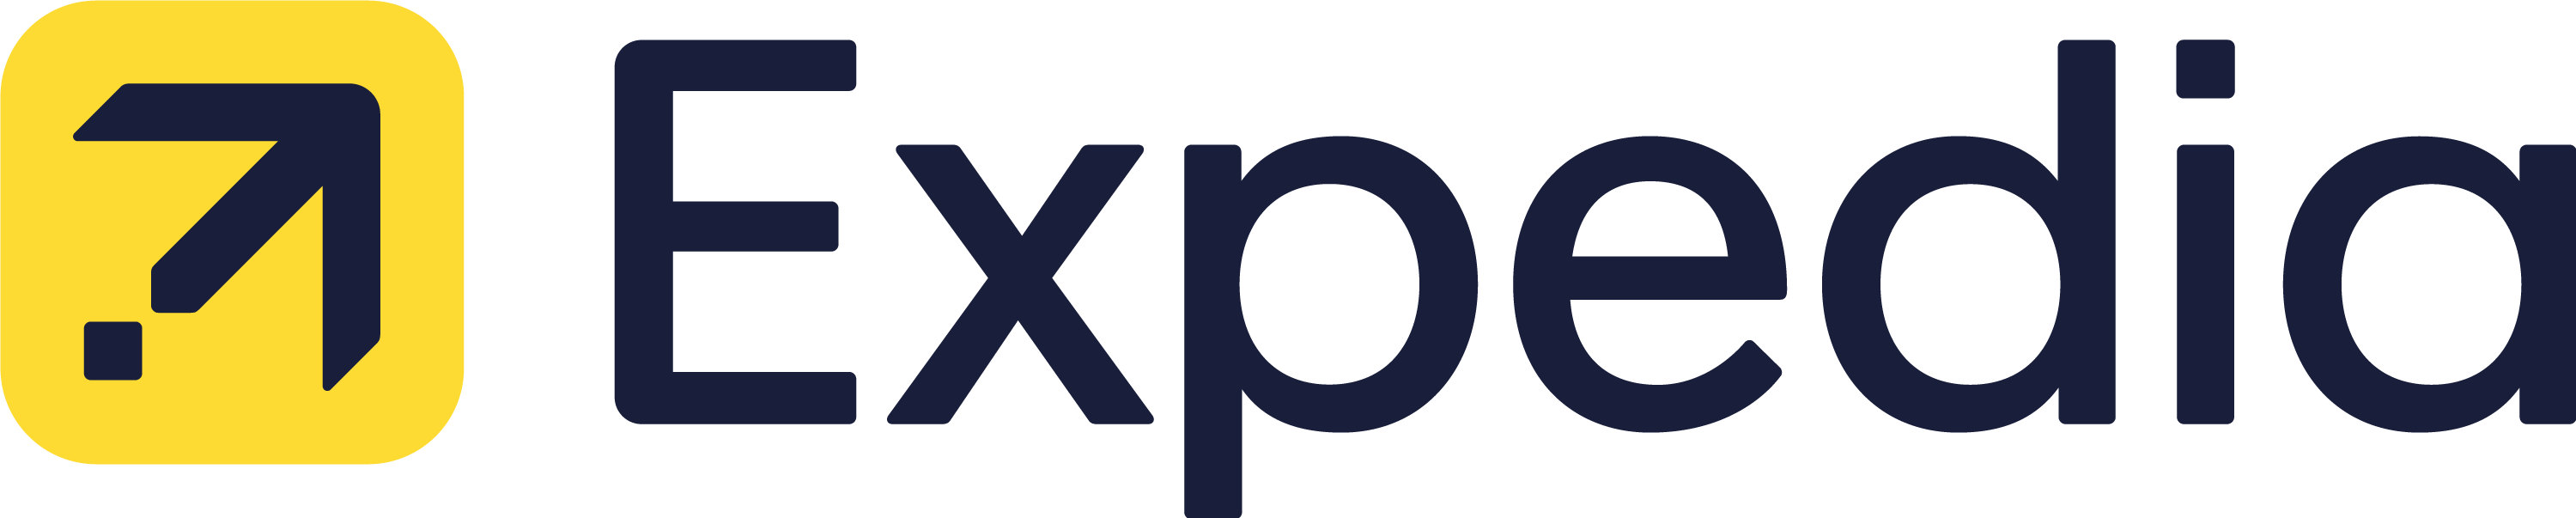 Expedia Logo PNG Image